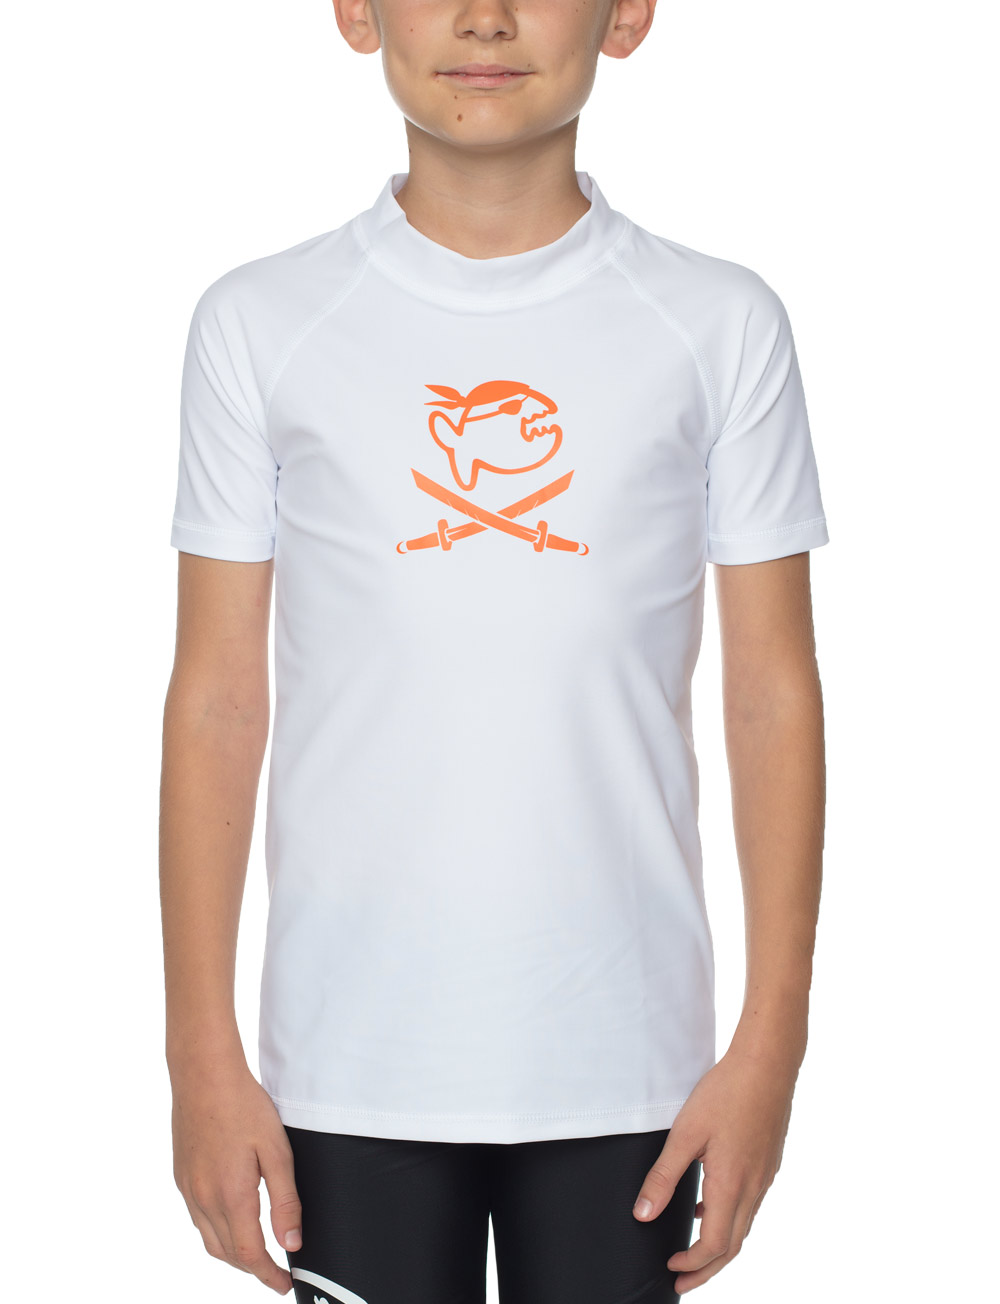 IQ UV 300 Shirt Kids Jolly Fish UV Shirt SALE